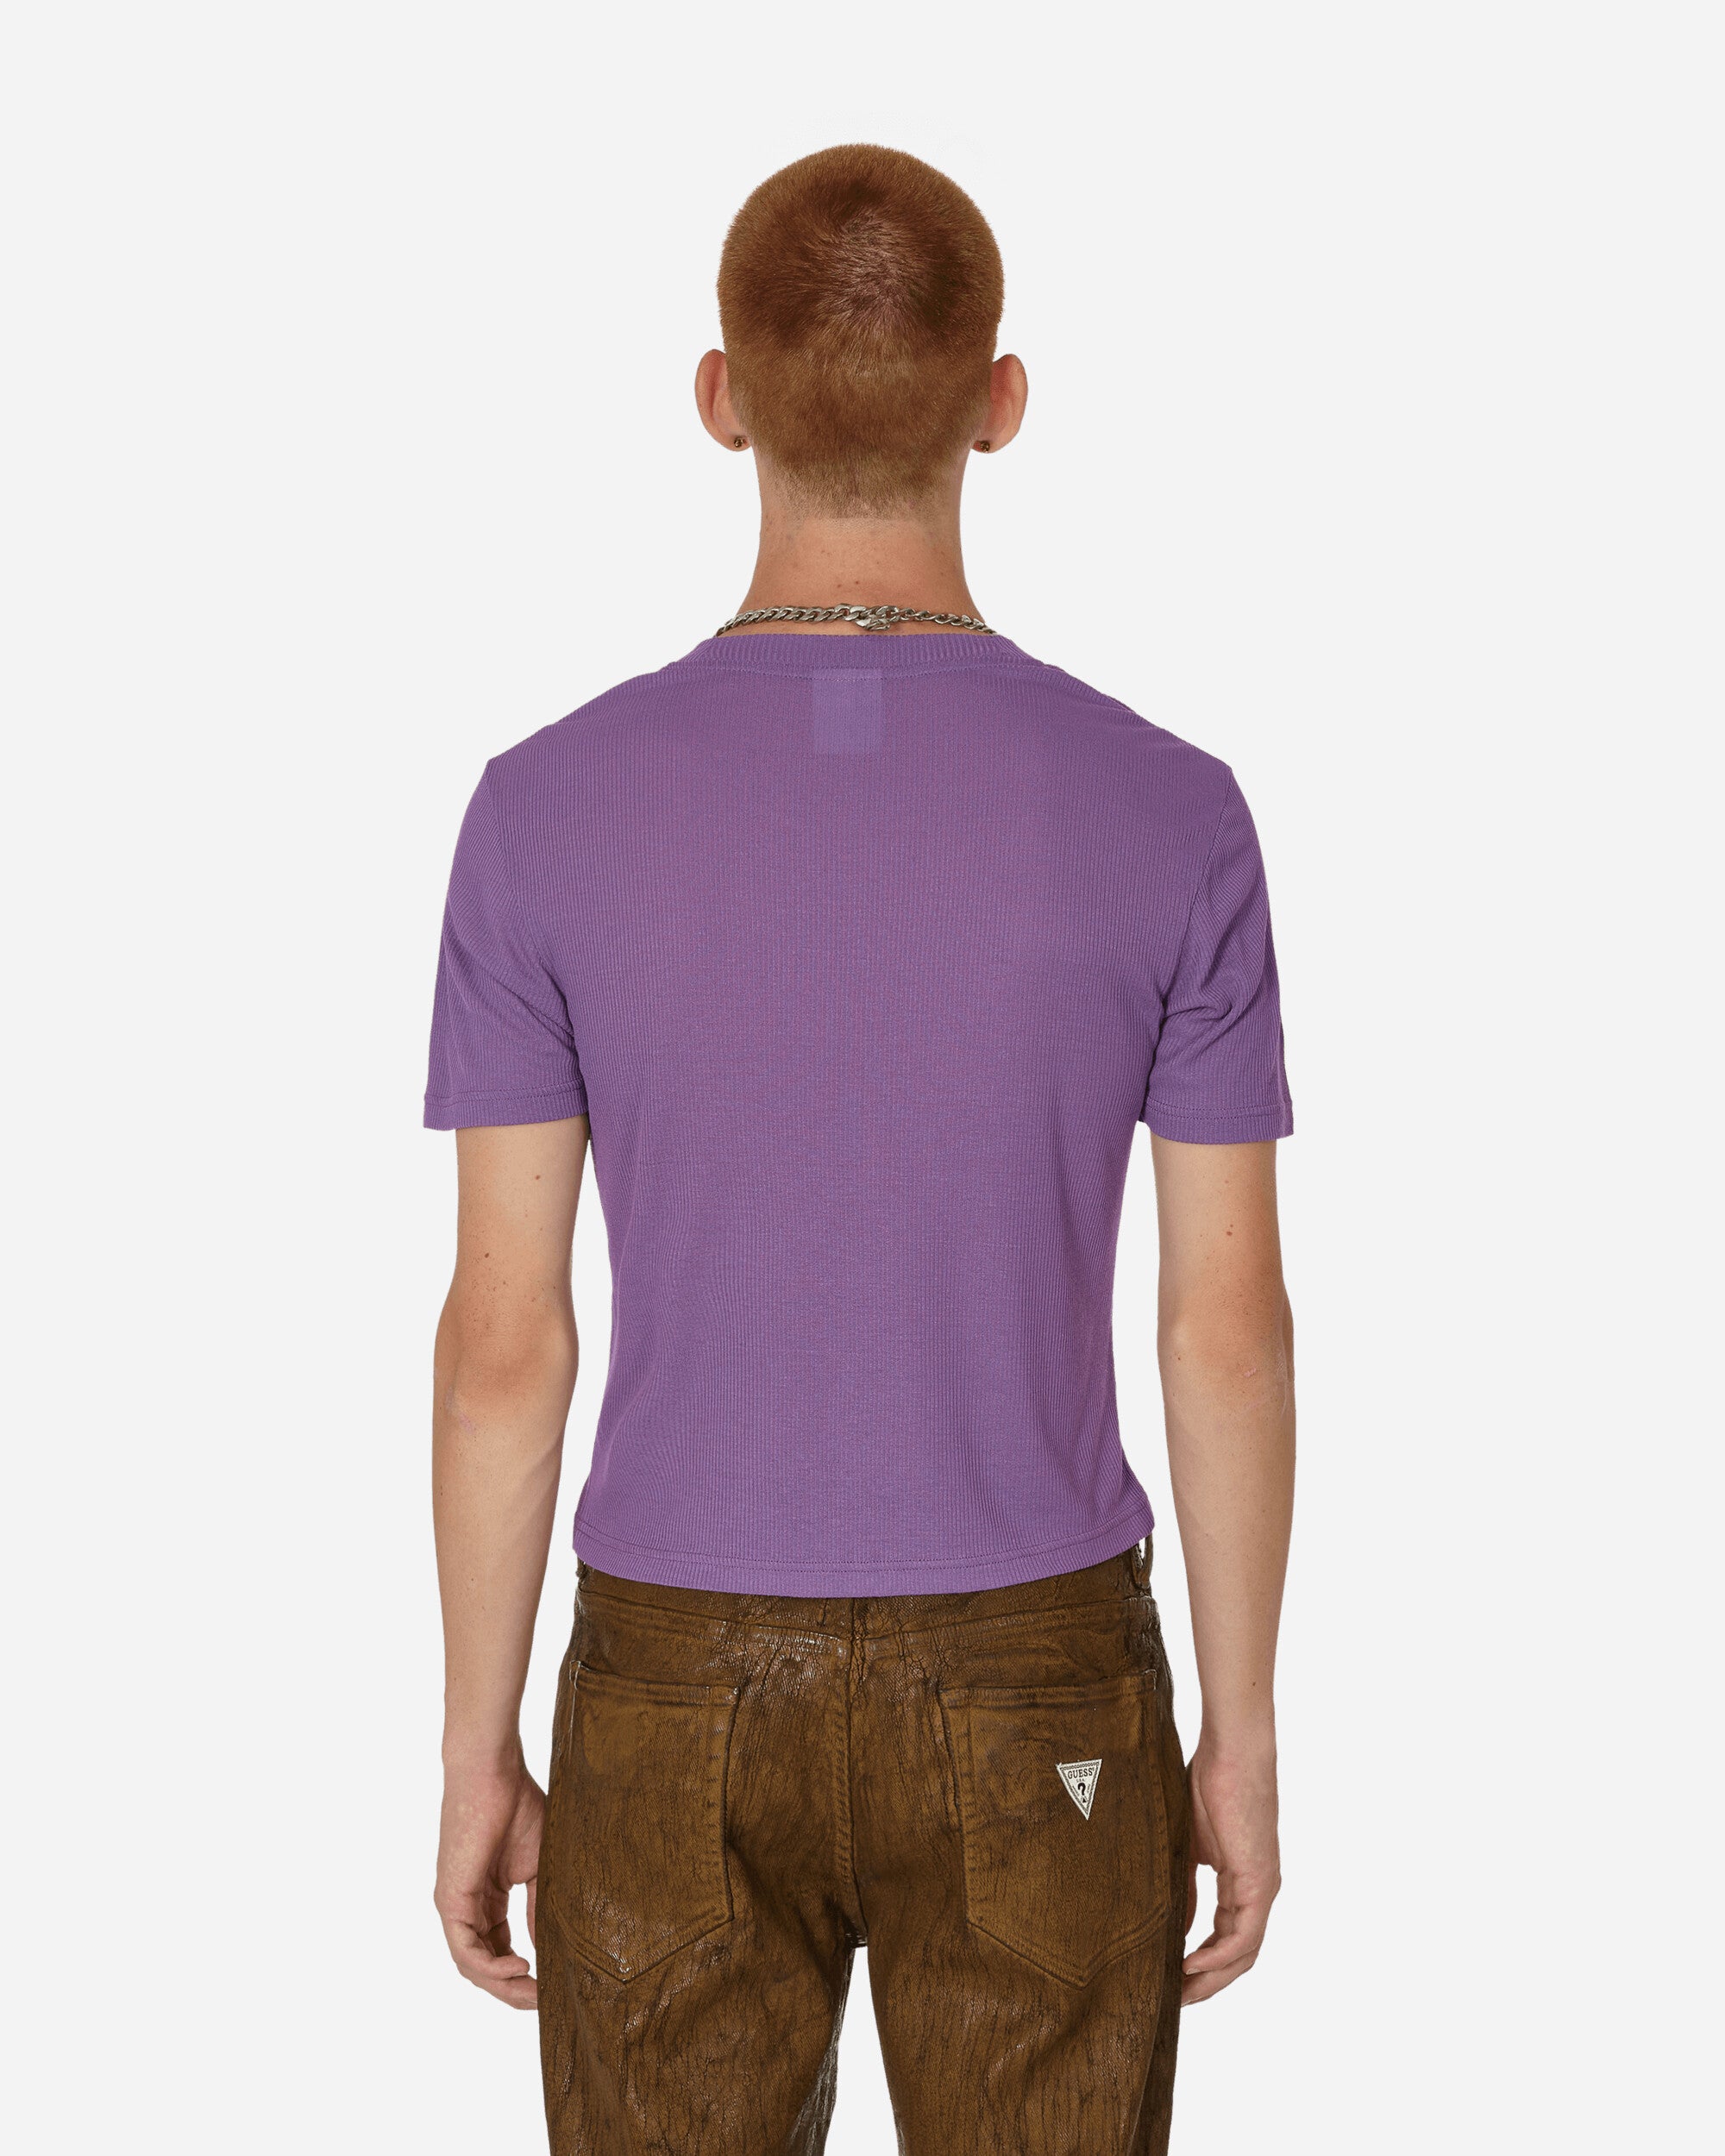 Stockholm (Surfboard) Club Beth Purple T-Shirts Shortsleeve BU1P70 001